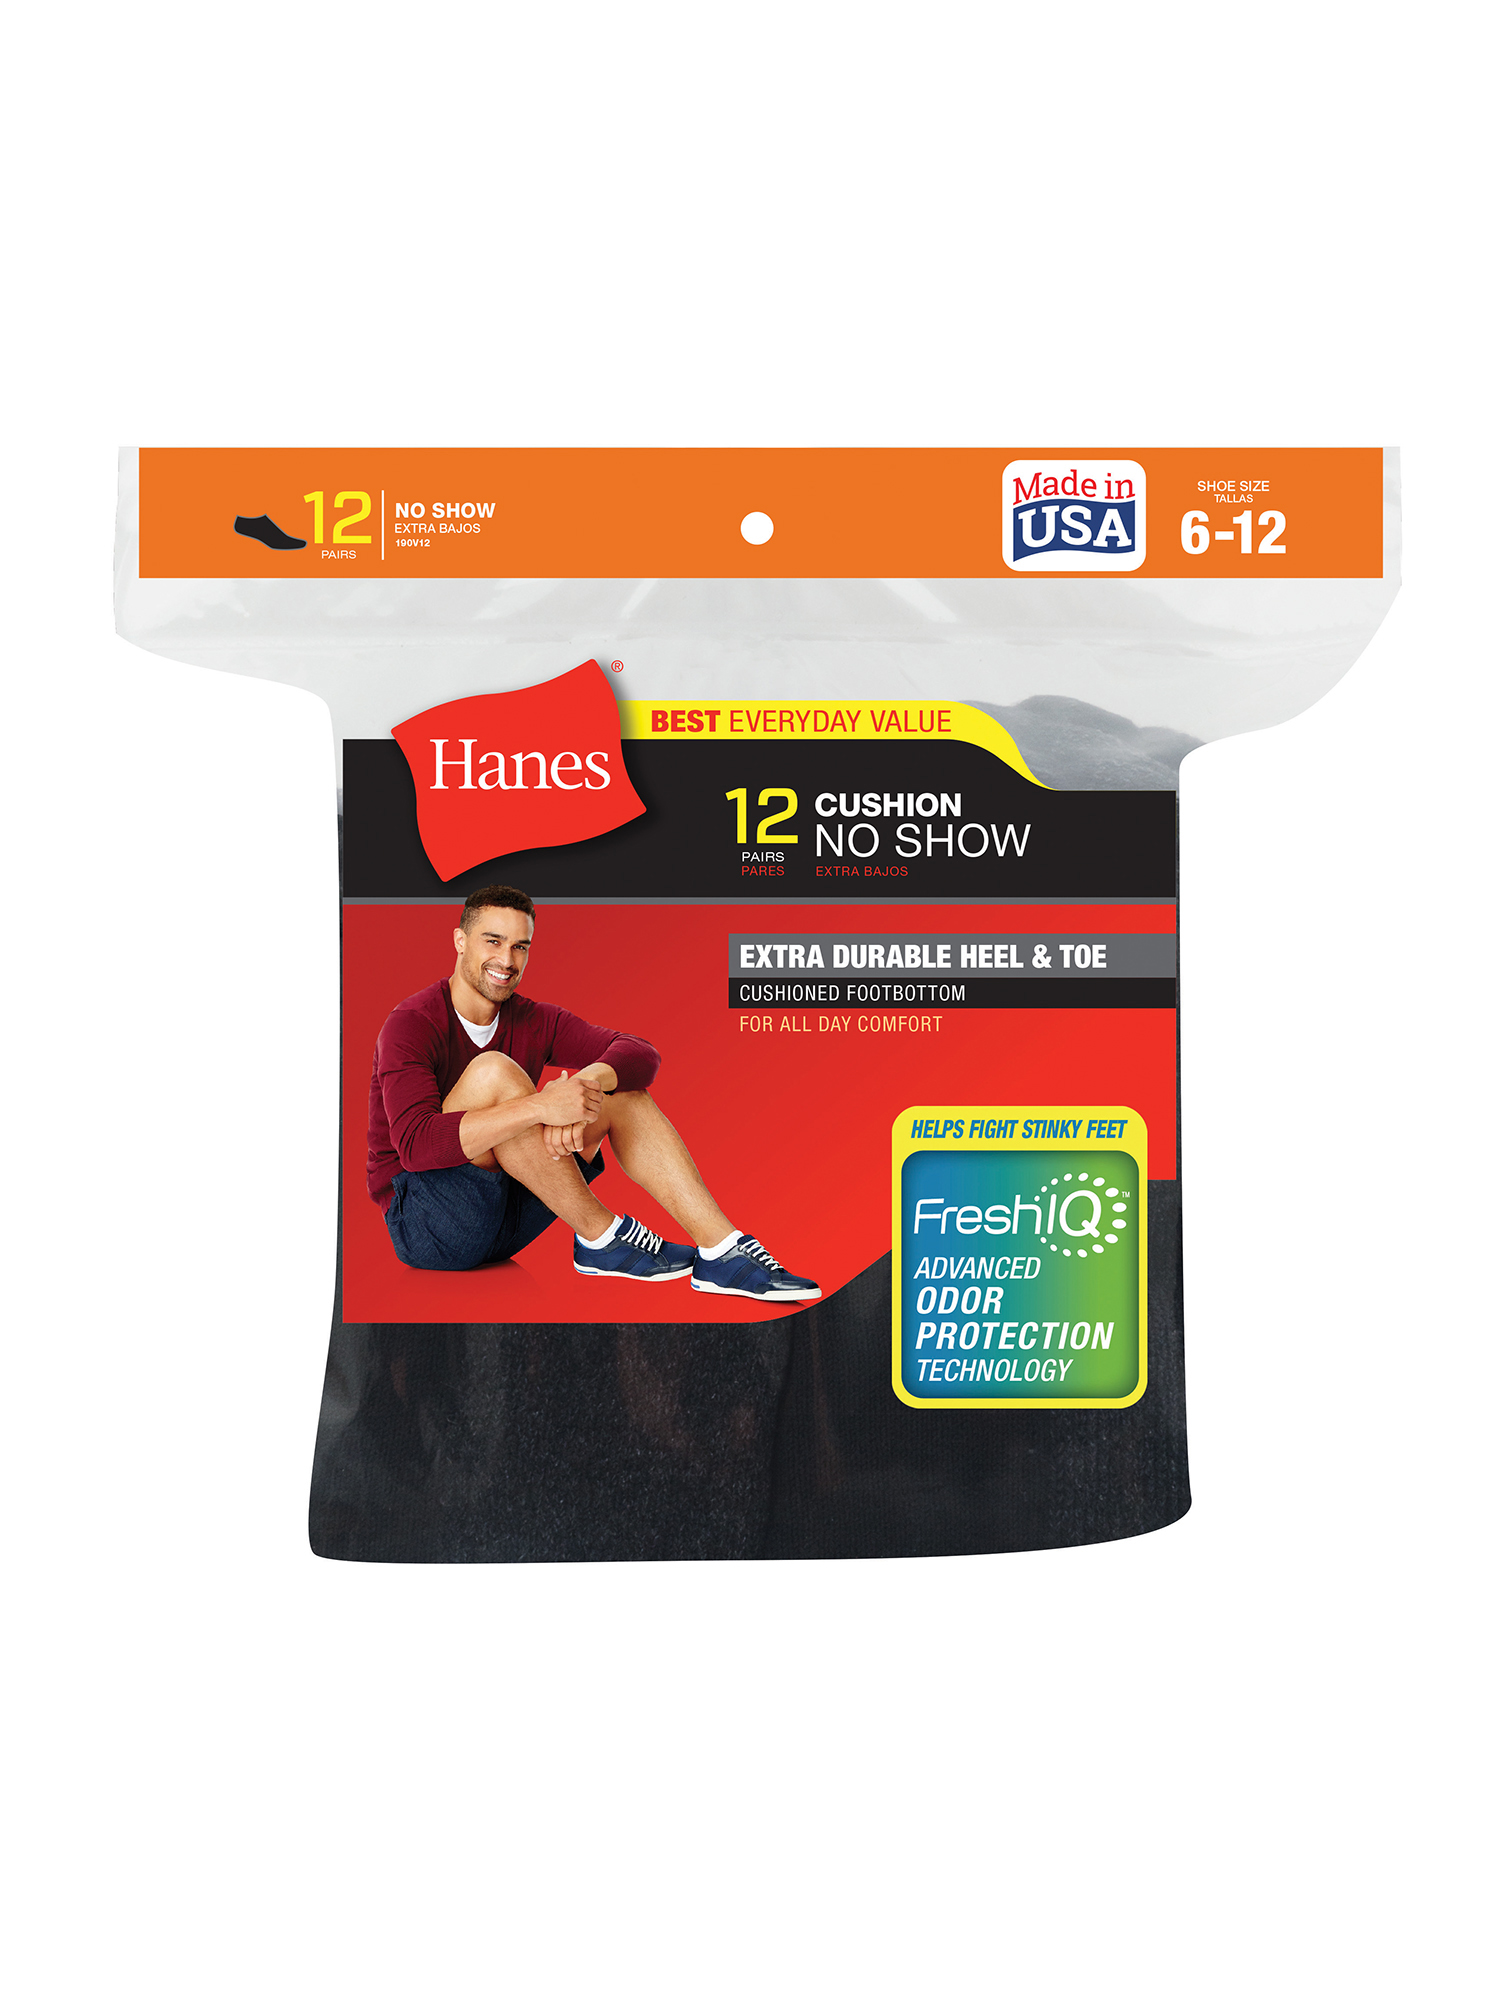 Hanes Men's Cushion No Show Socks, 12 Pack - image 5 of 8